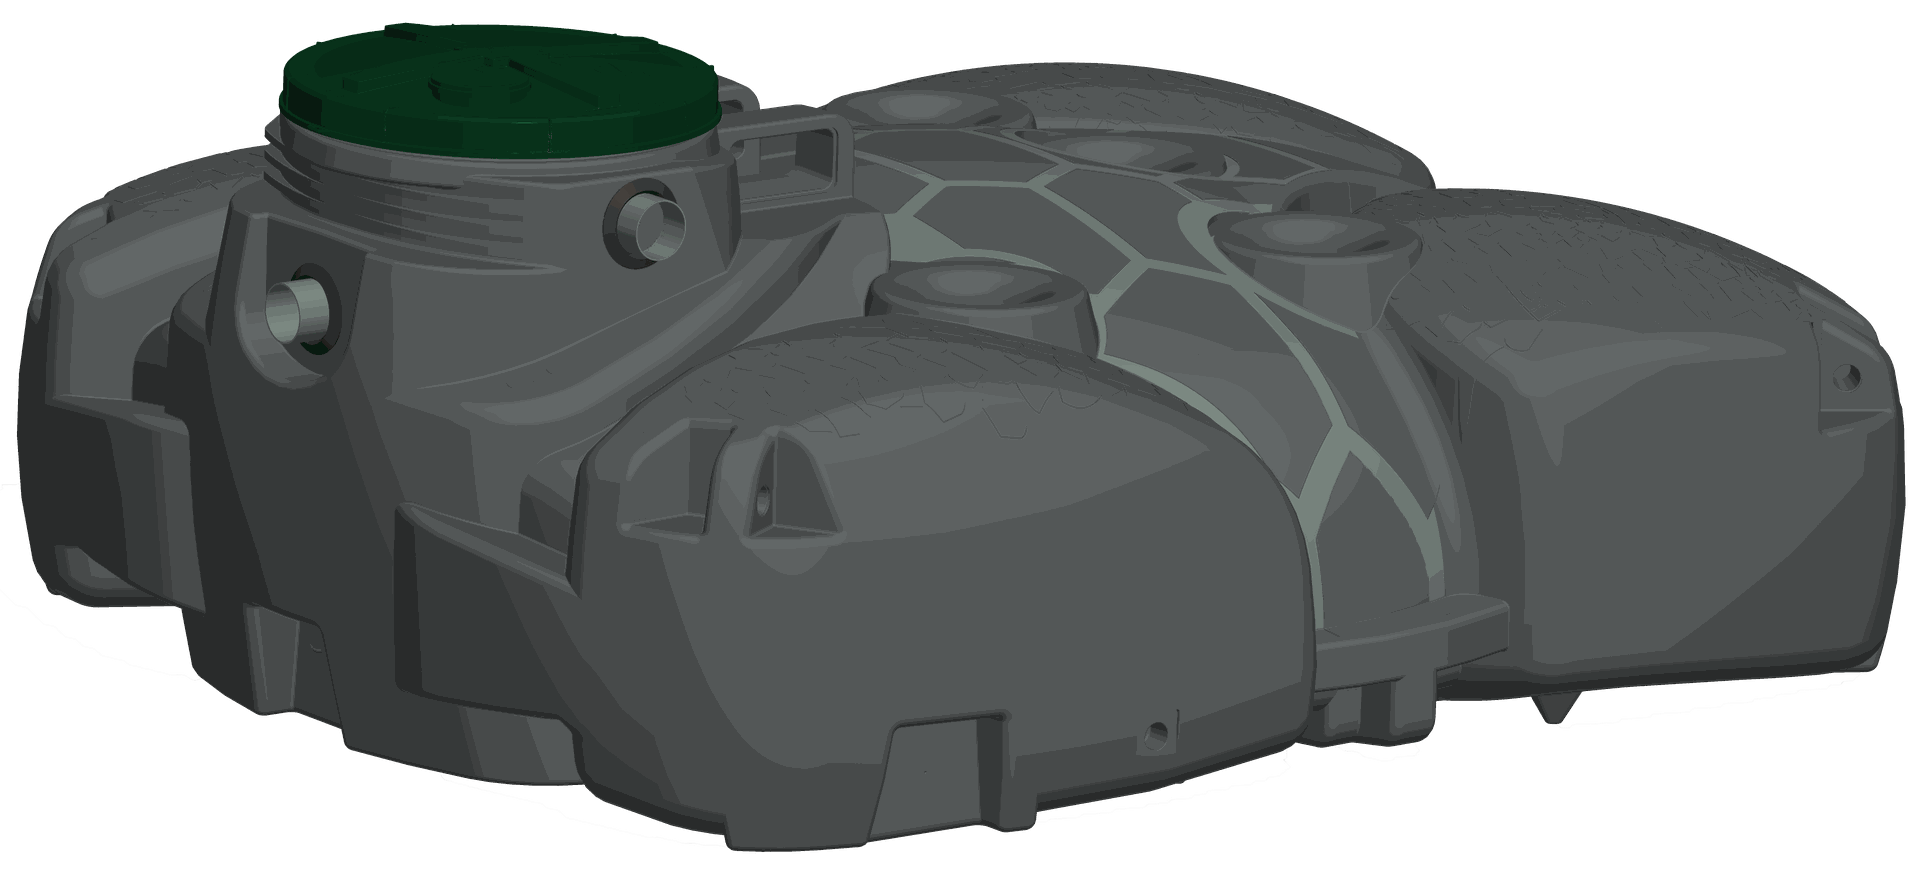 [6022-REG-PLA] Extra flat AQUAMOP tank with regulated flow rate - Main image